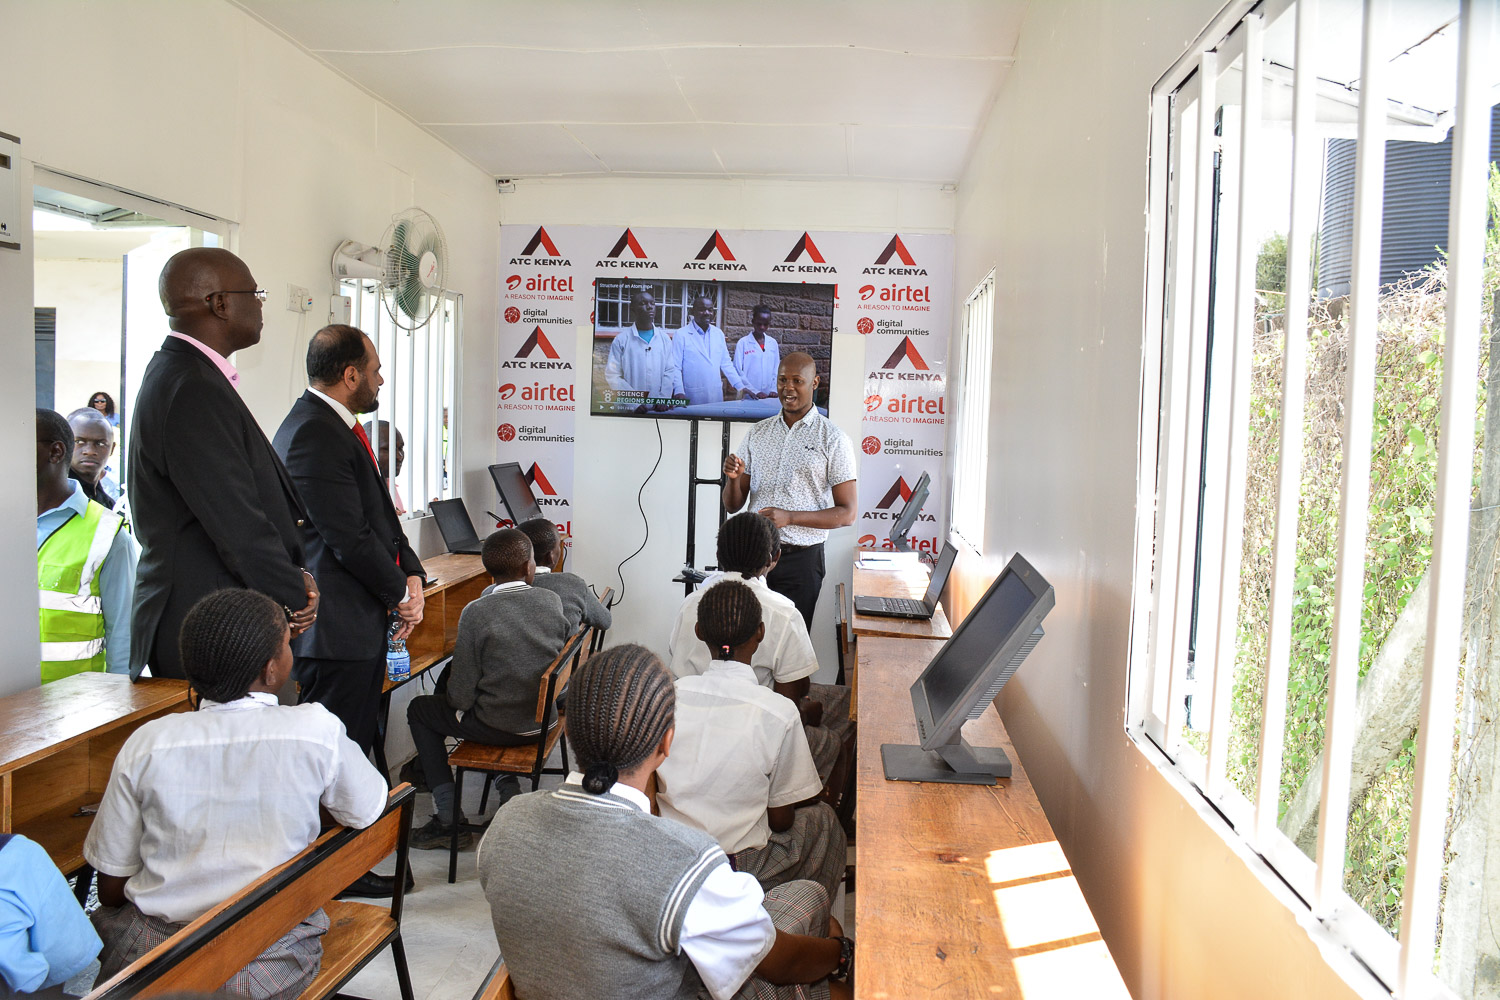 Airtel, ATC Kenya to Provide Internet to 50 Primary Schools In Kenya